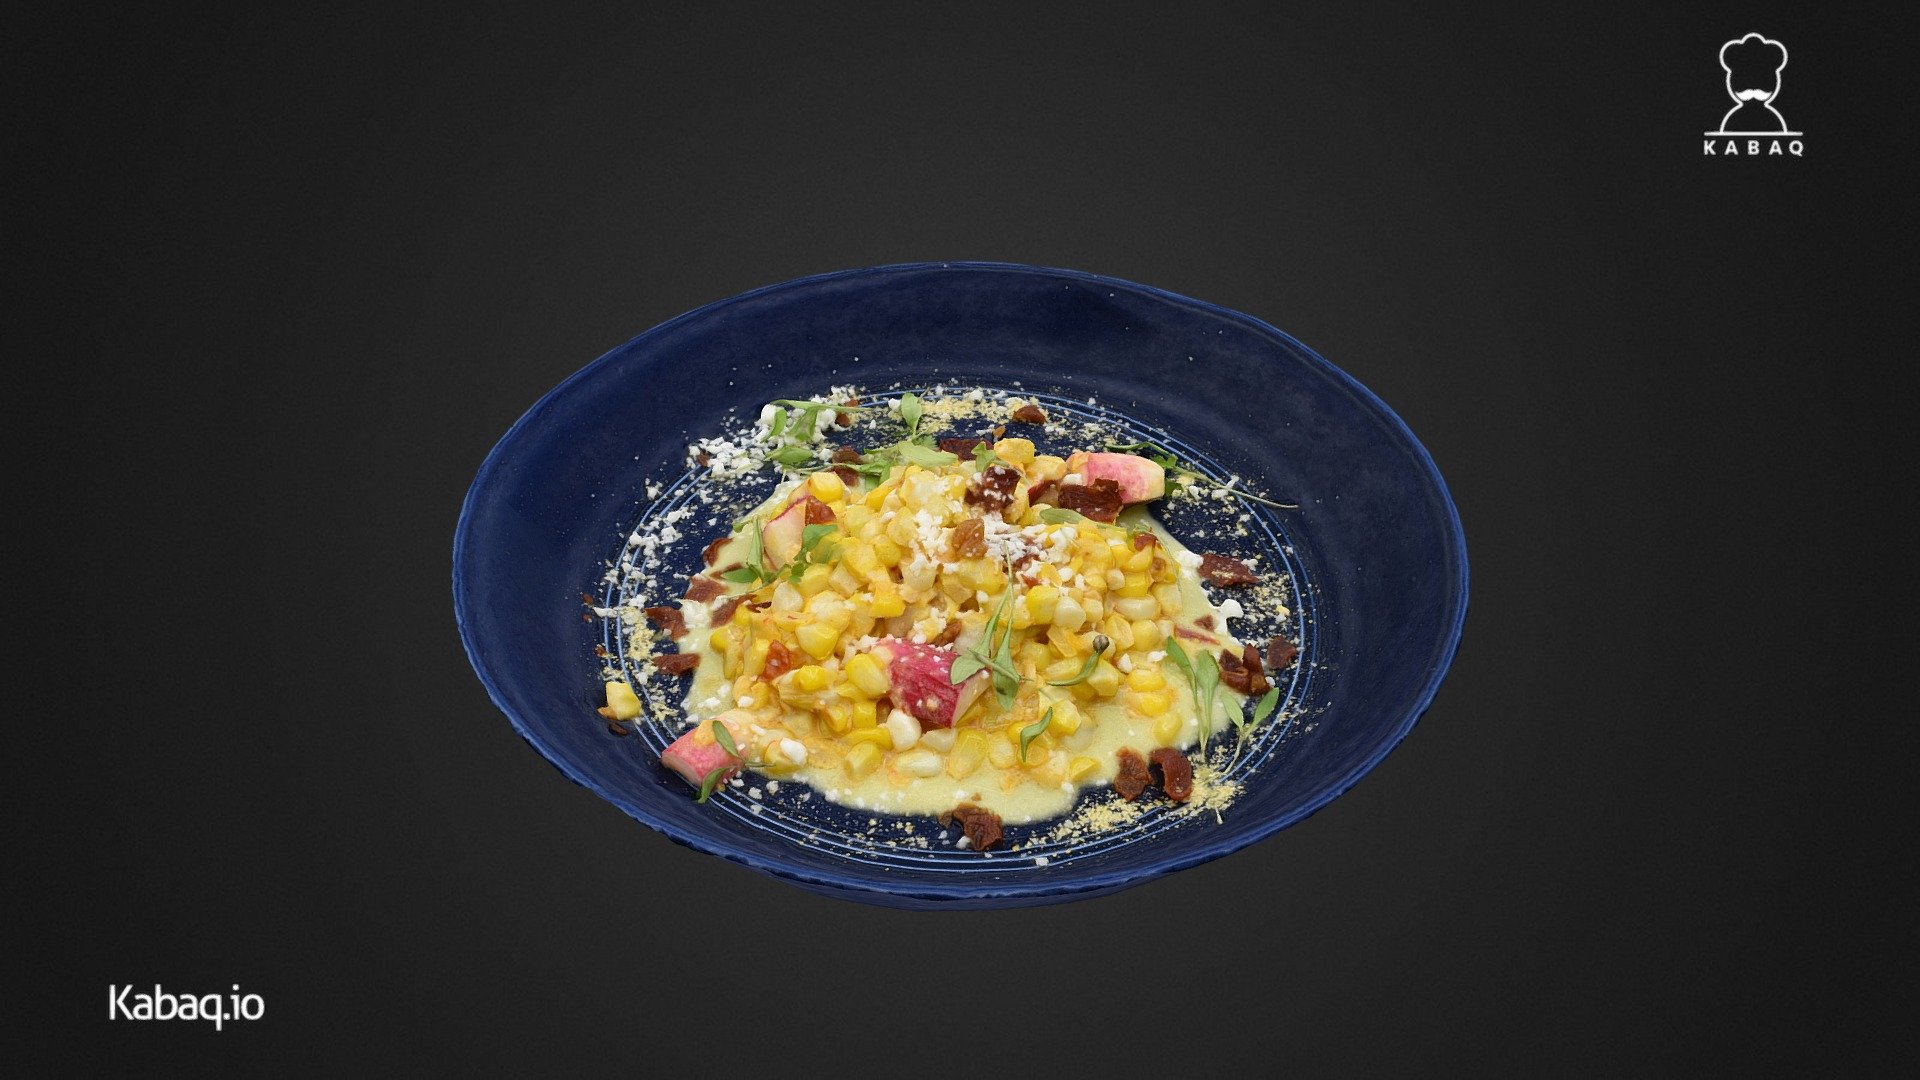 Corn and radish esquites, corn milk, chili piquin, jamon serrano - Alta Calidad - Corn and Radish Esquites - 3D model by QReal Lifelike 3D (@kabaq) 3d model